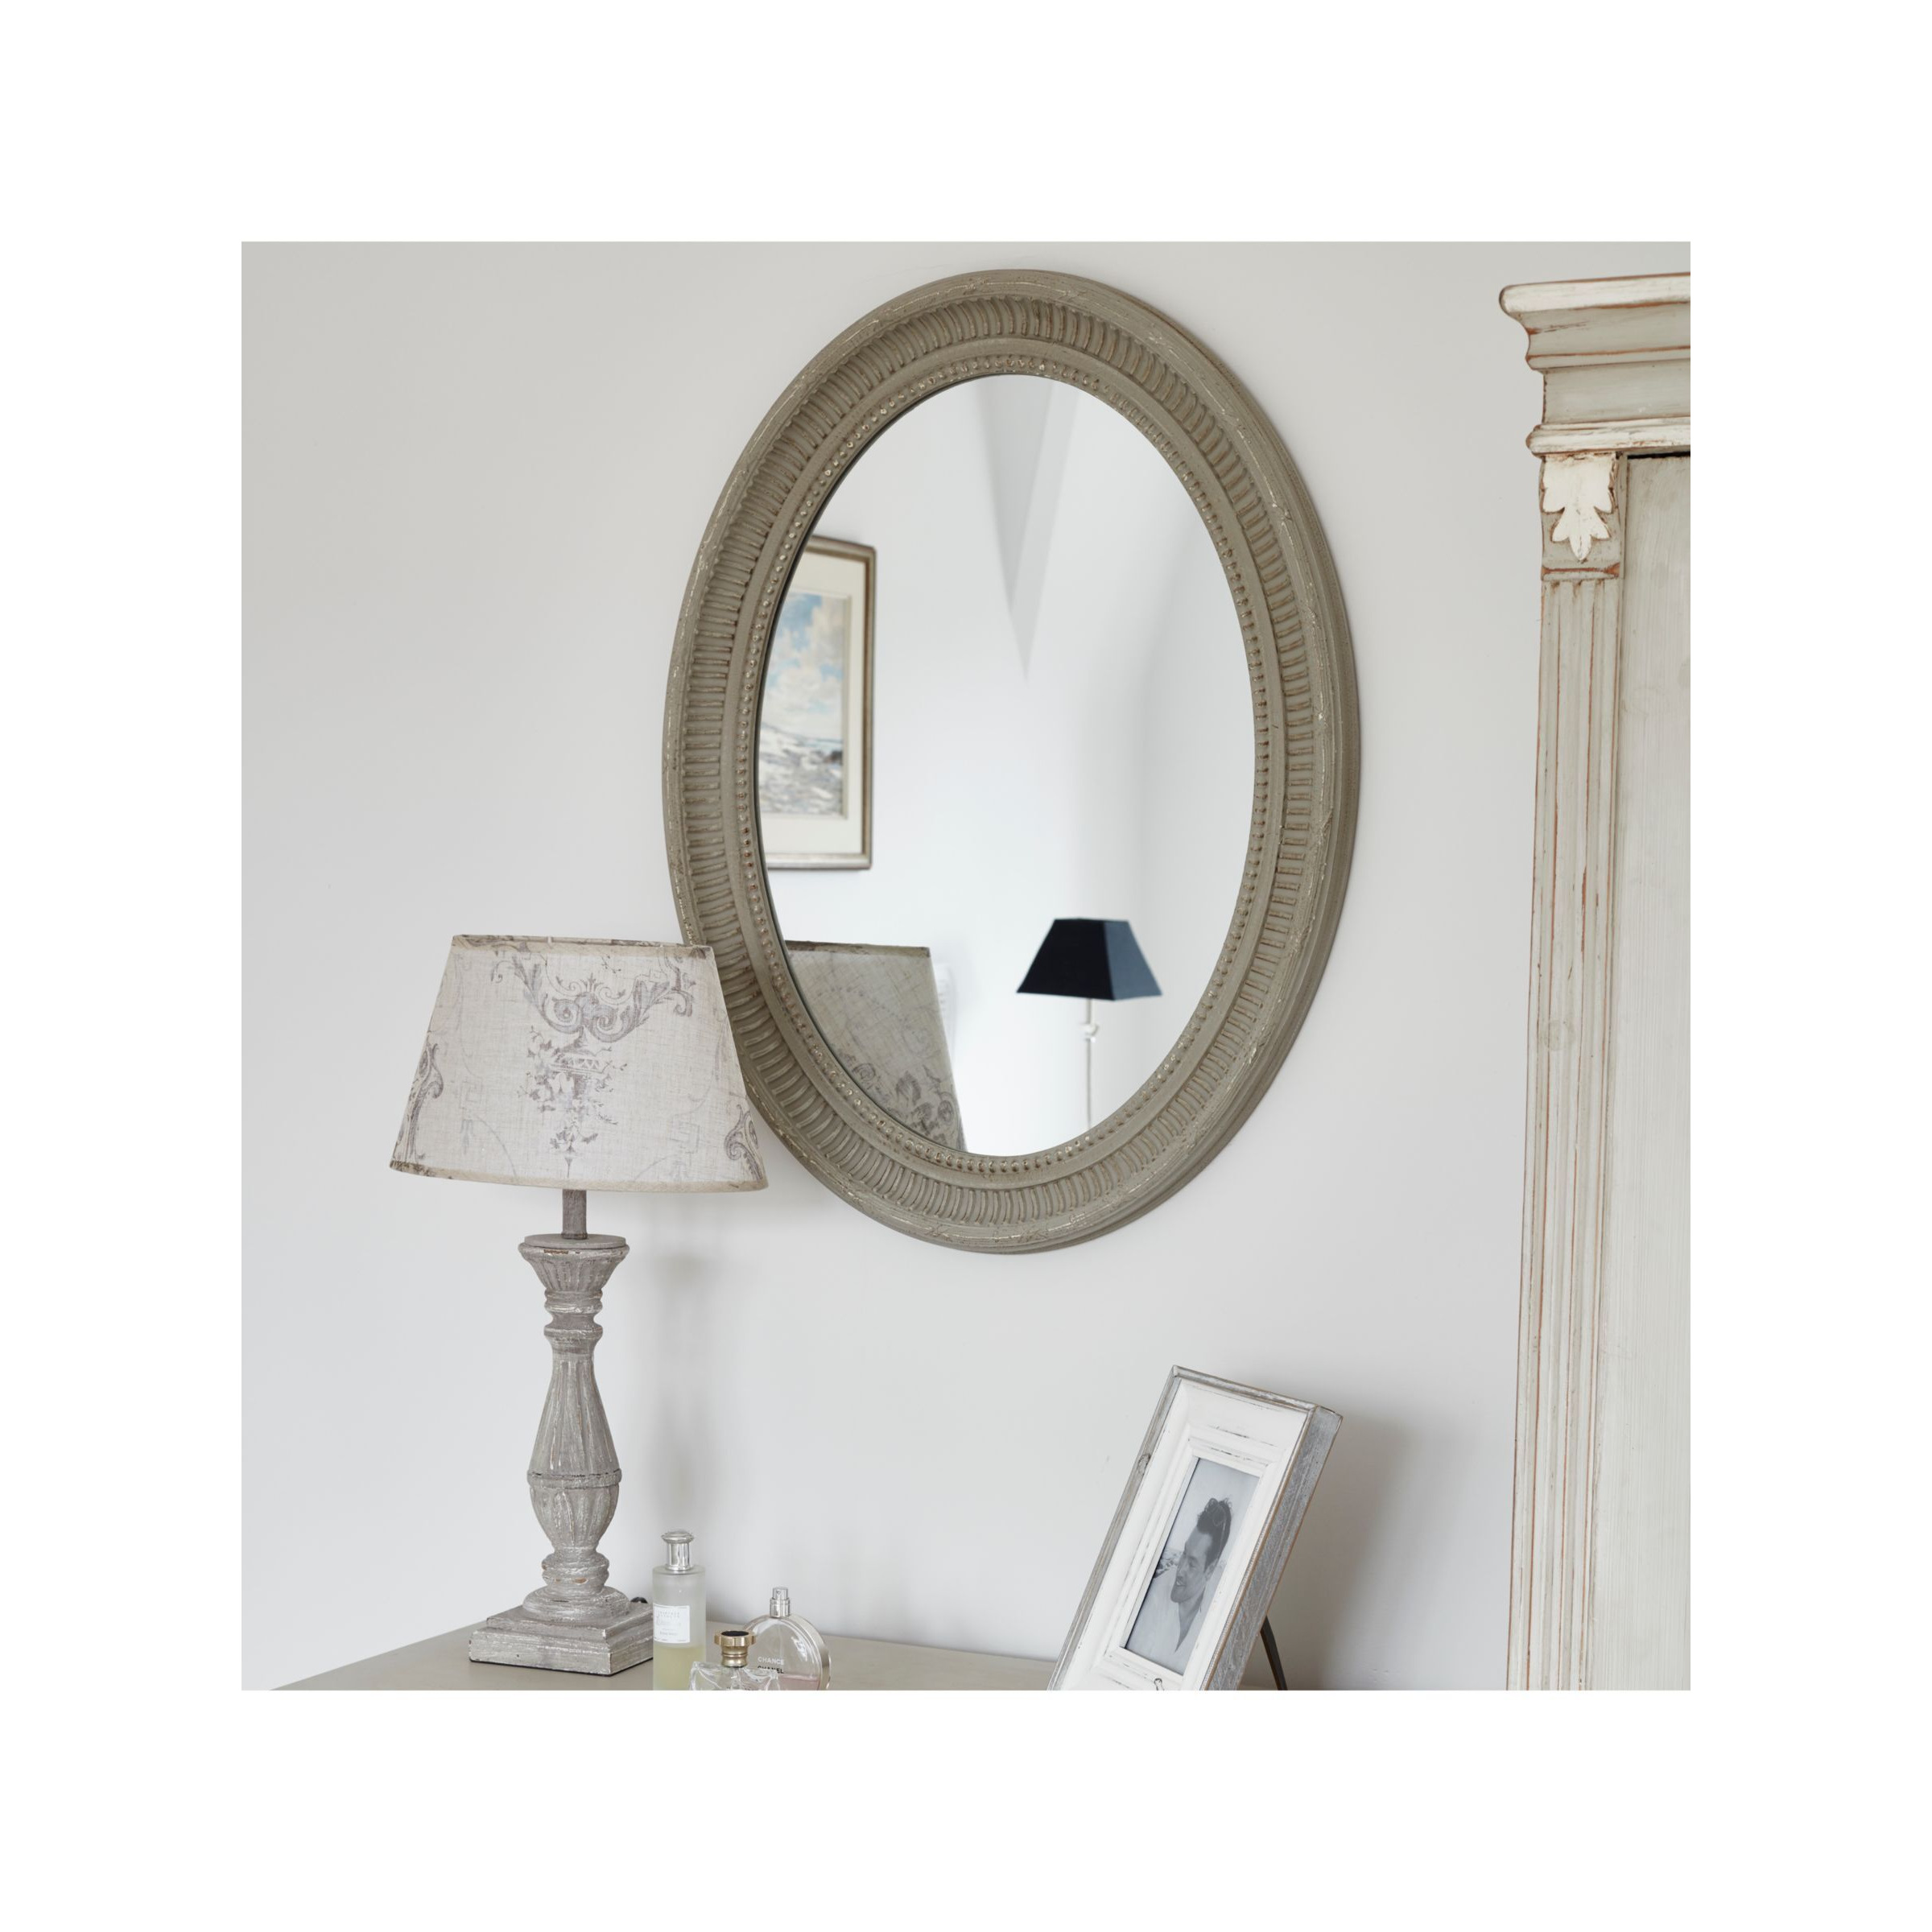 One.World Wilton Oval Wood Wall Mirror, 86 x 66cm, Grey - image 1